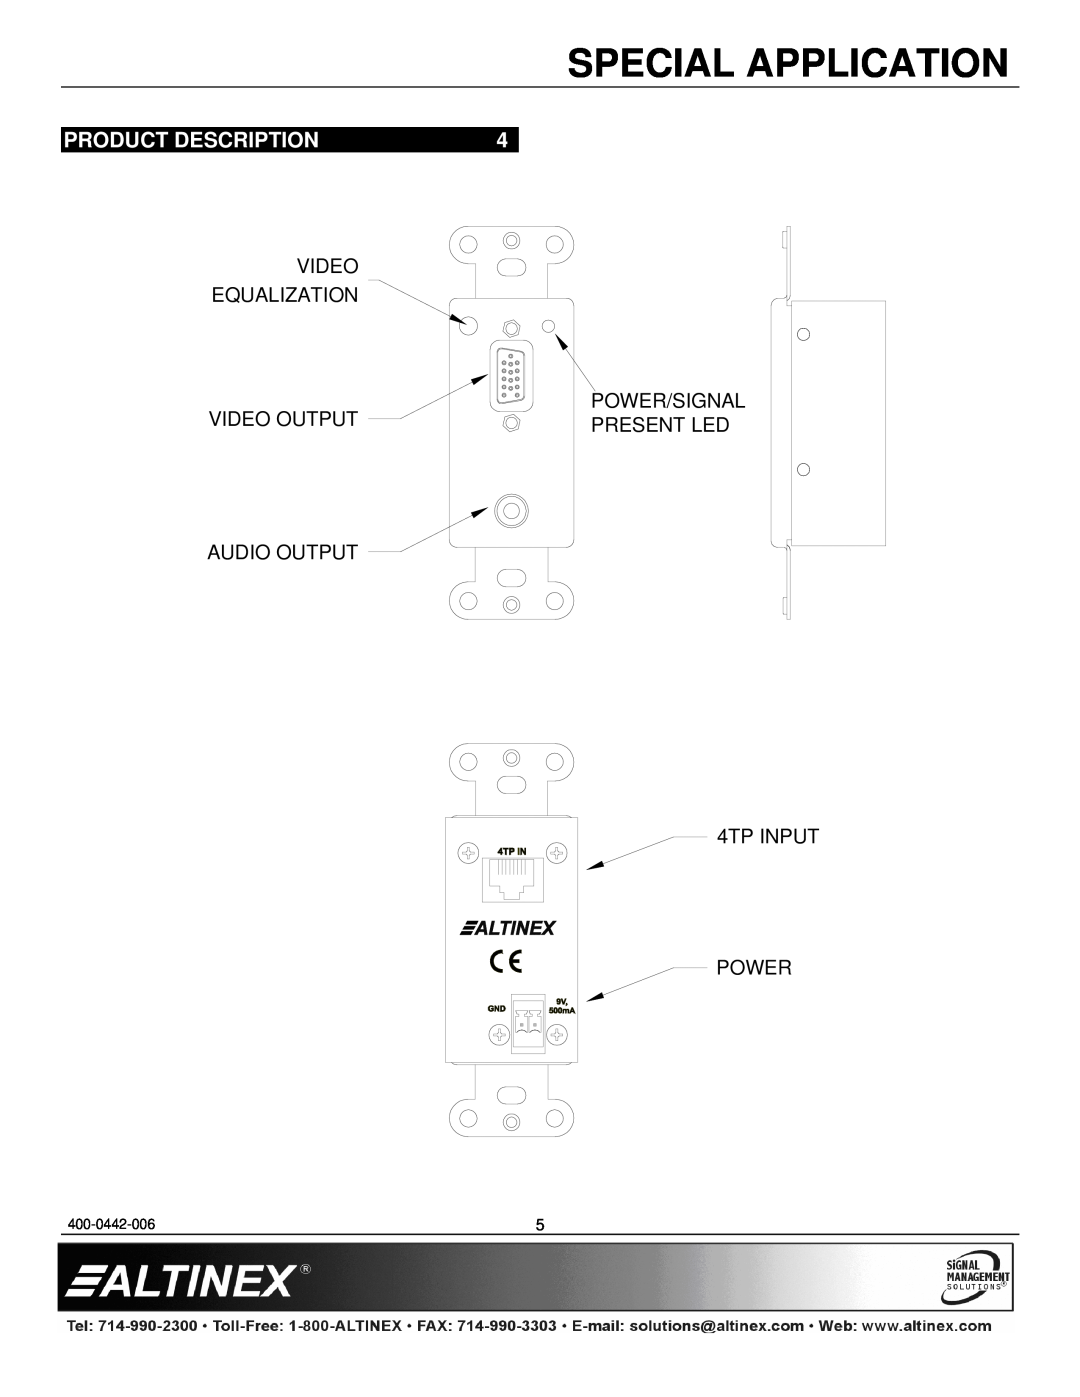 Altinex DS801-111 Product Description, Special Application, Video Equalization Video Output Audio Output, 400-0442-006 